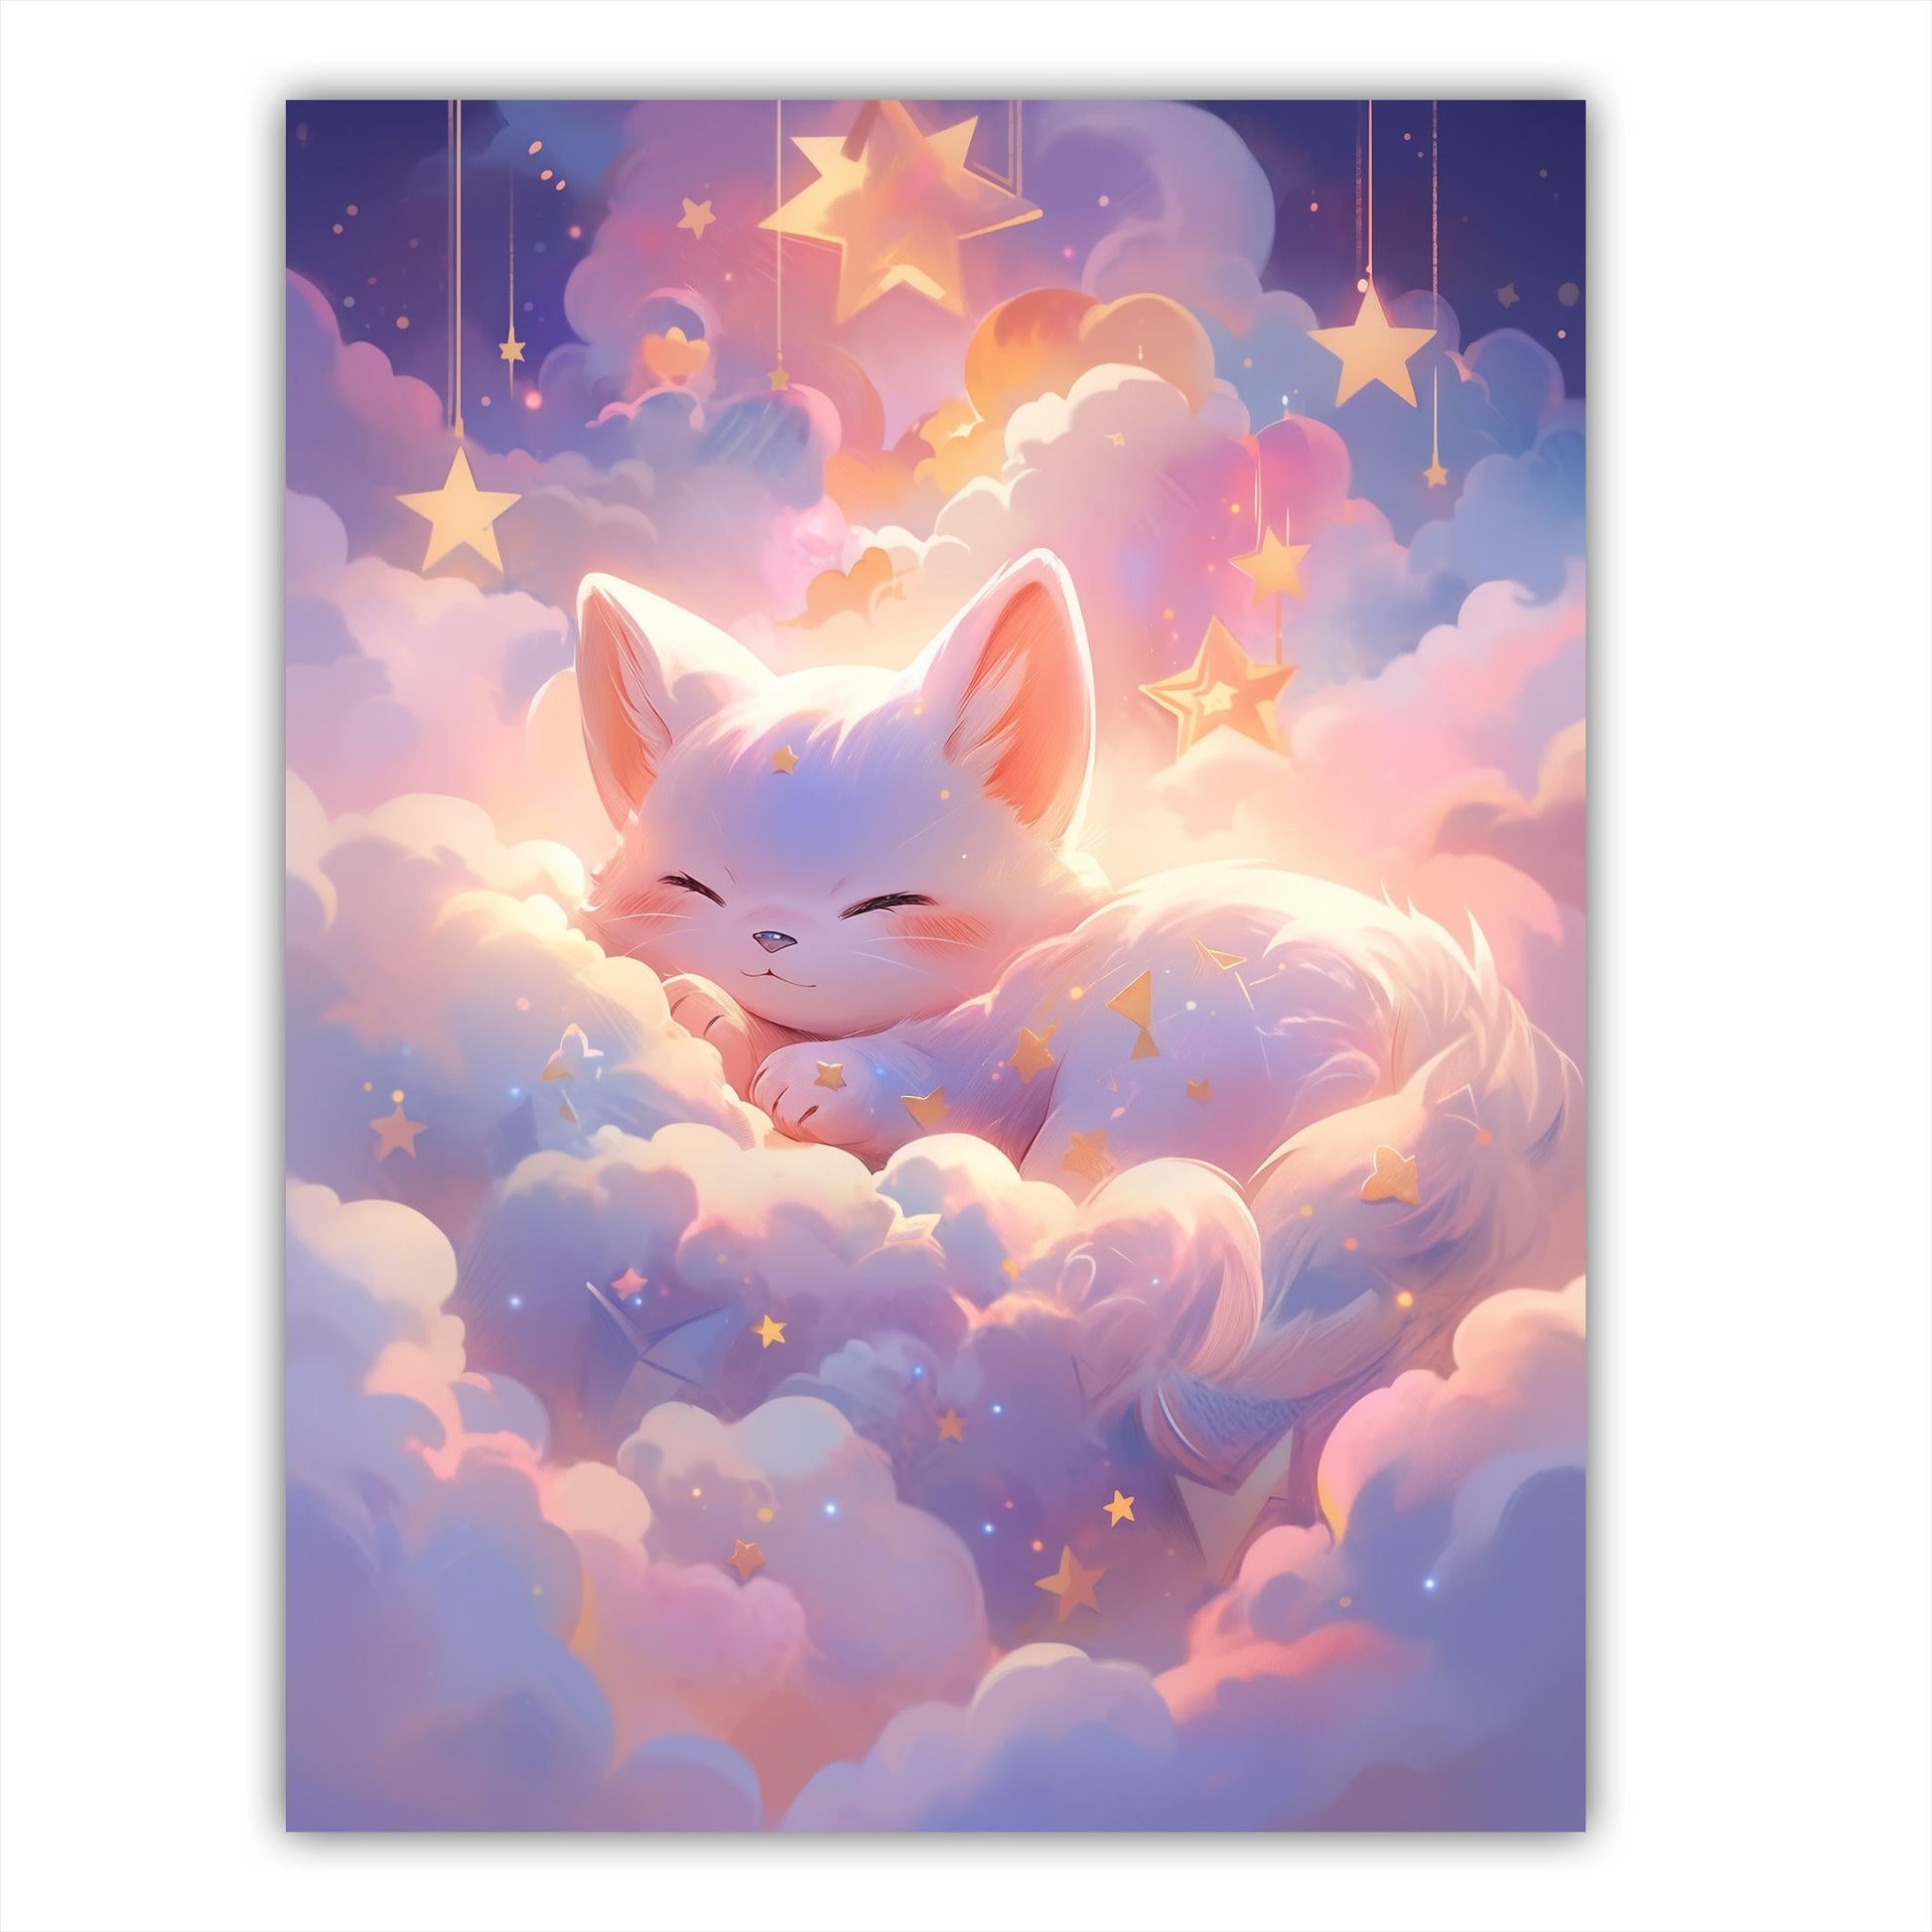 Kitten's Starry Dreams - Atka Inspirations